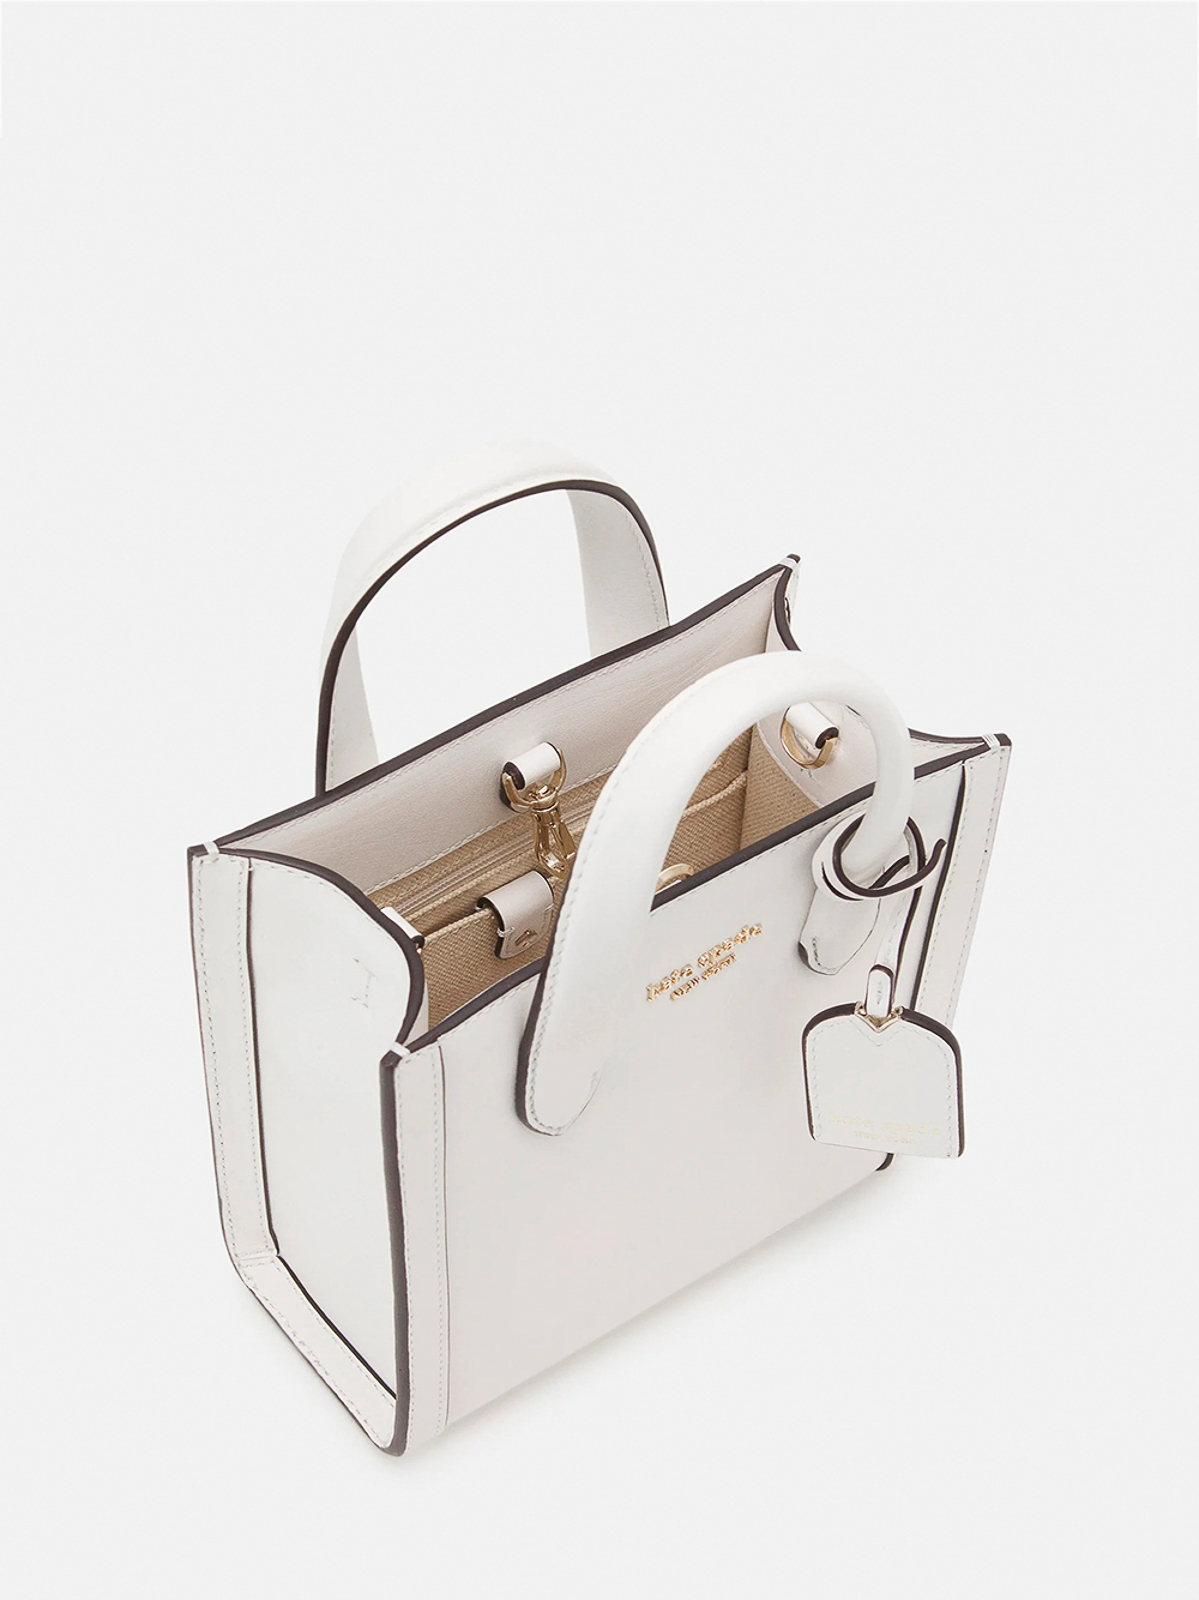 Kate Spade Manhattan Mini Tote Bag in White